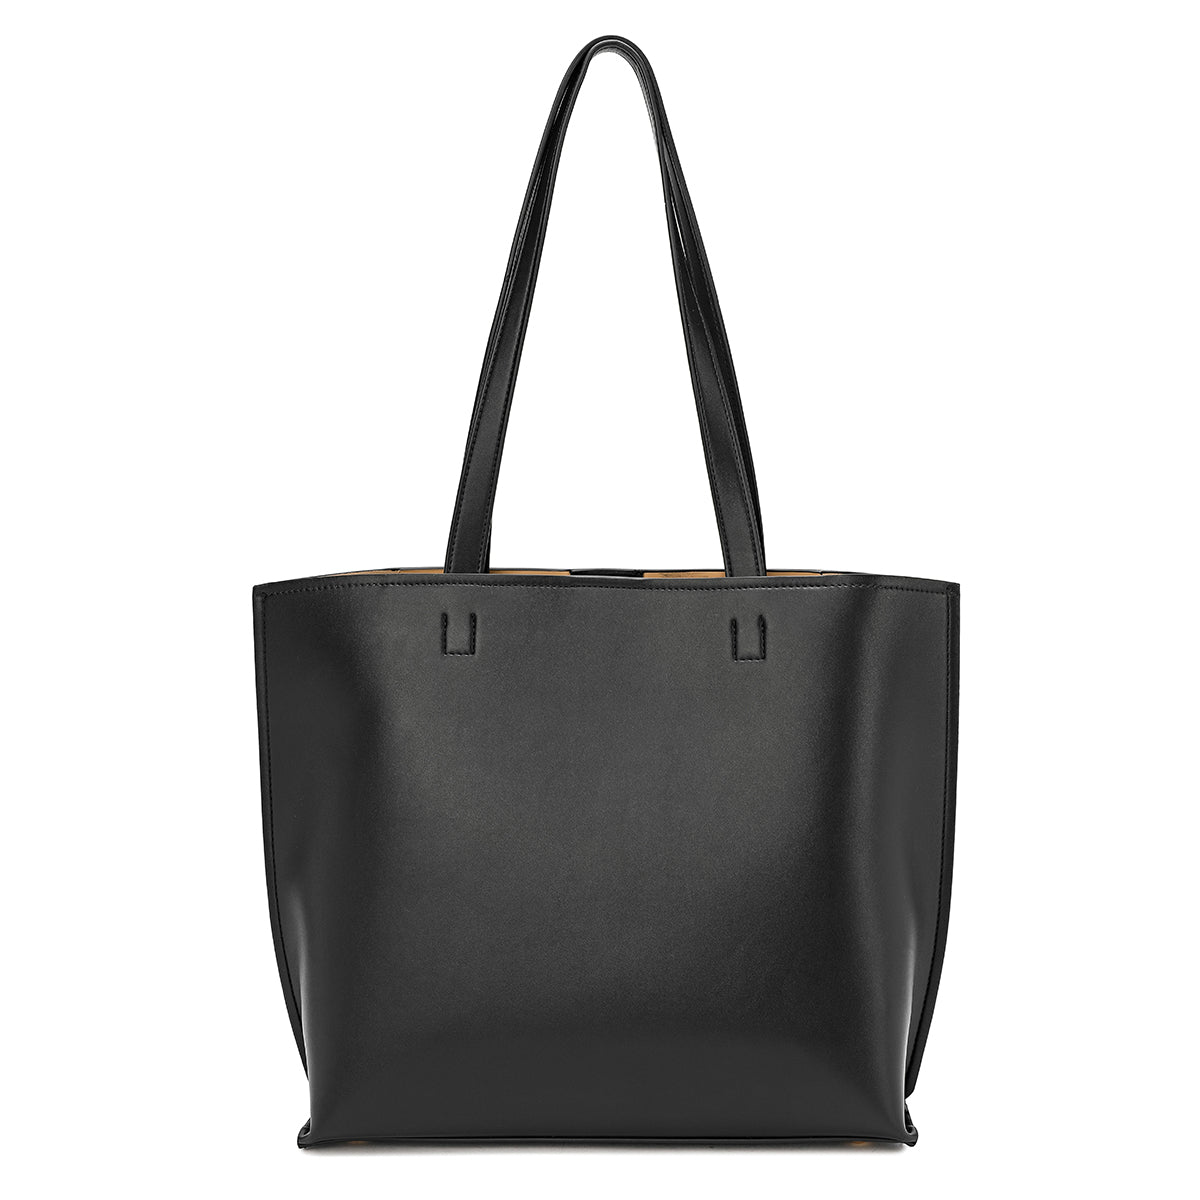 A simple, classic, spacious handbag in several colours